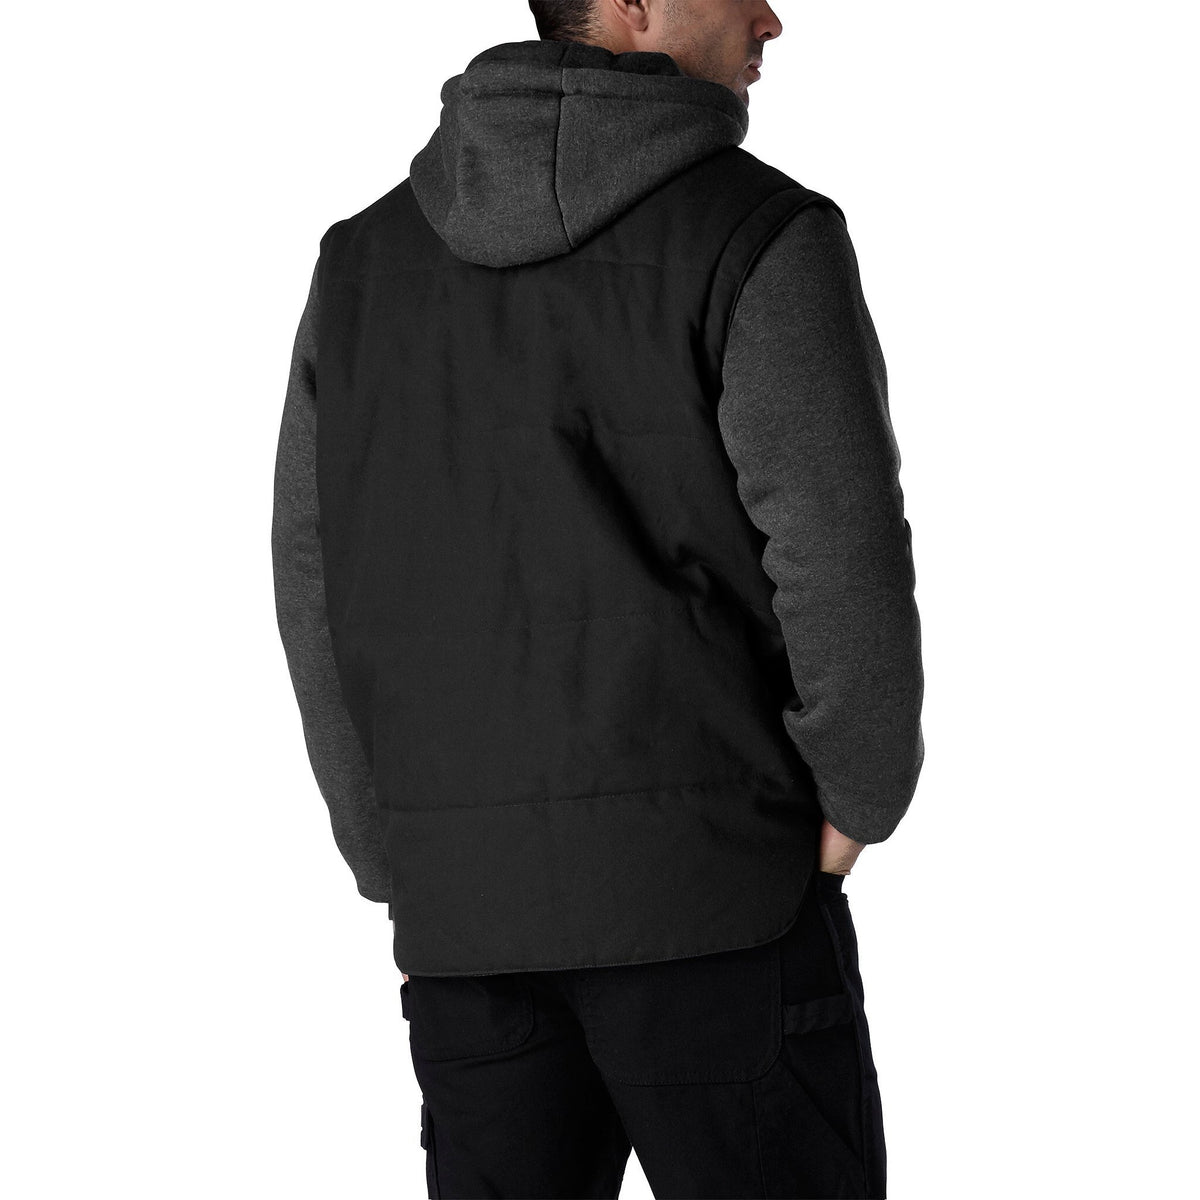 Men's 2-in-1 Insulated Convertible work jacket & vest - Black/Charcoal